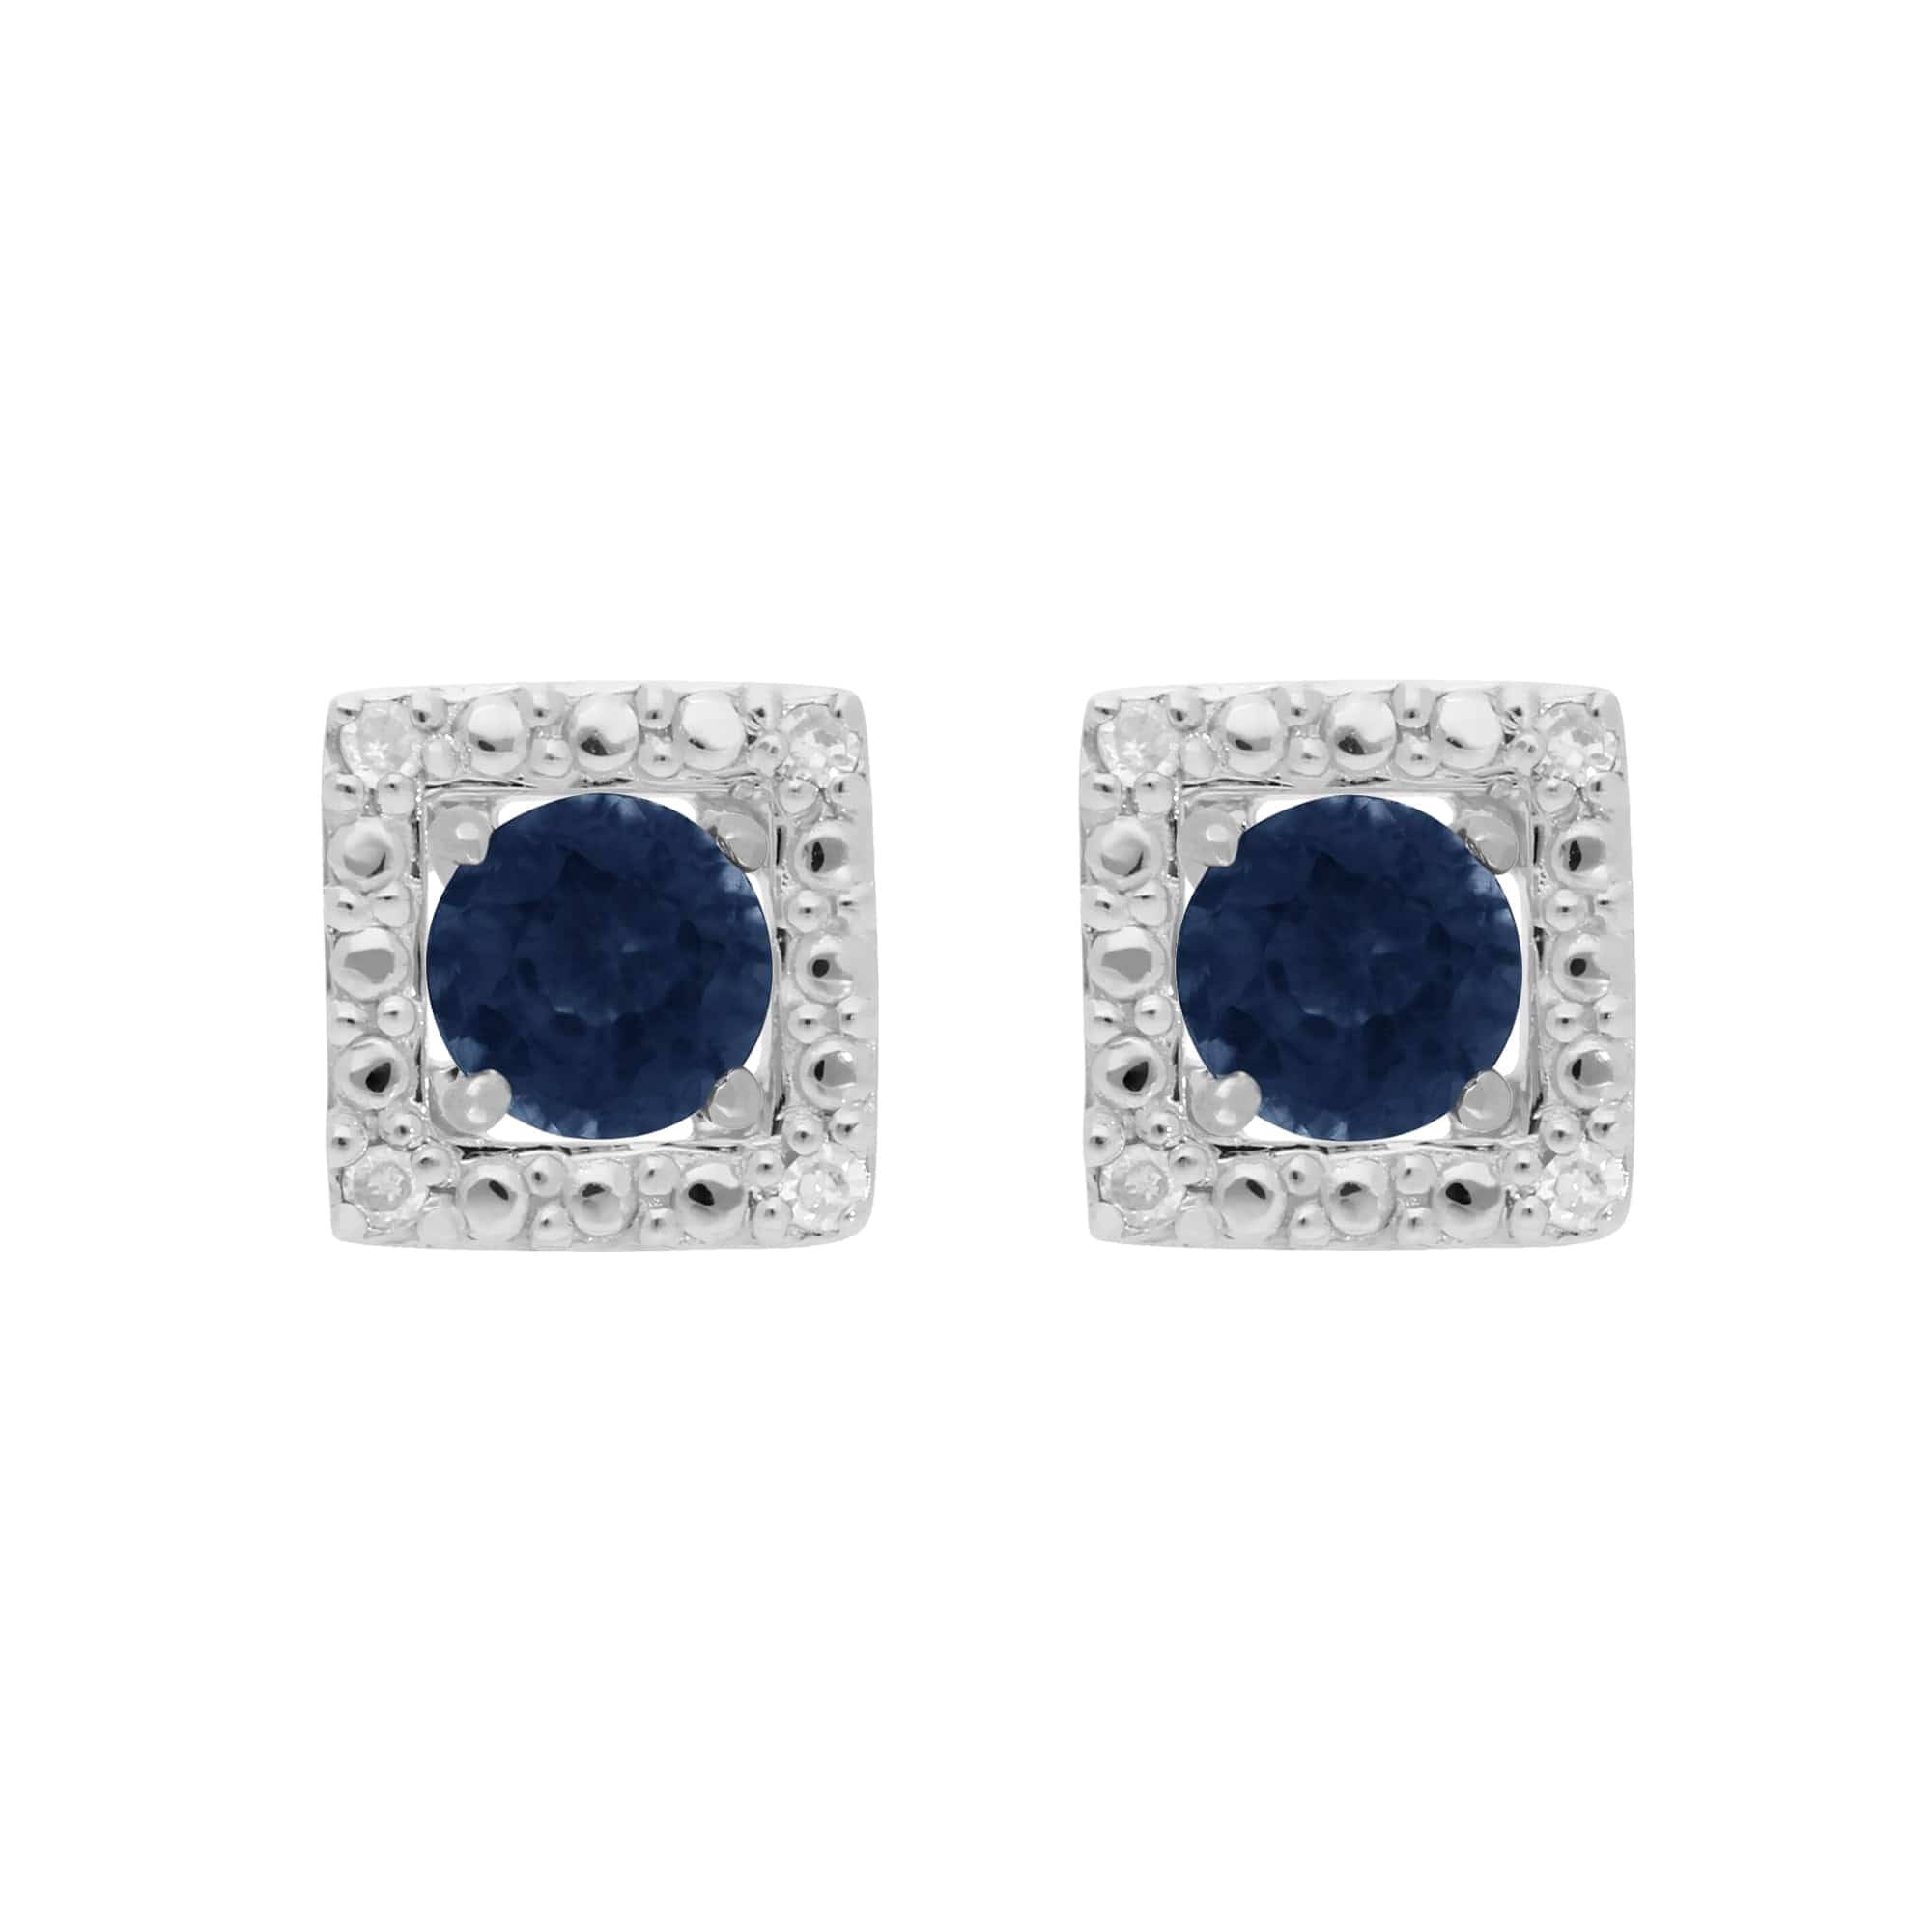 117E0031169-162E0245019 Classic Round Blue Sapphire Studs with Detachable Diamond Square Ear Jacket in 9ct White Gold 1